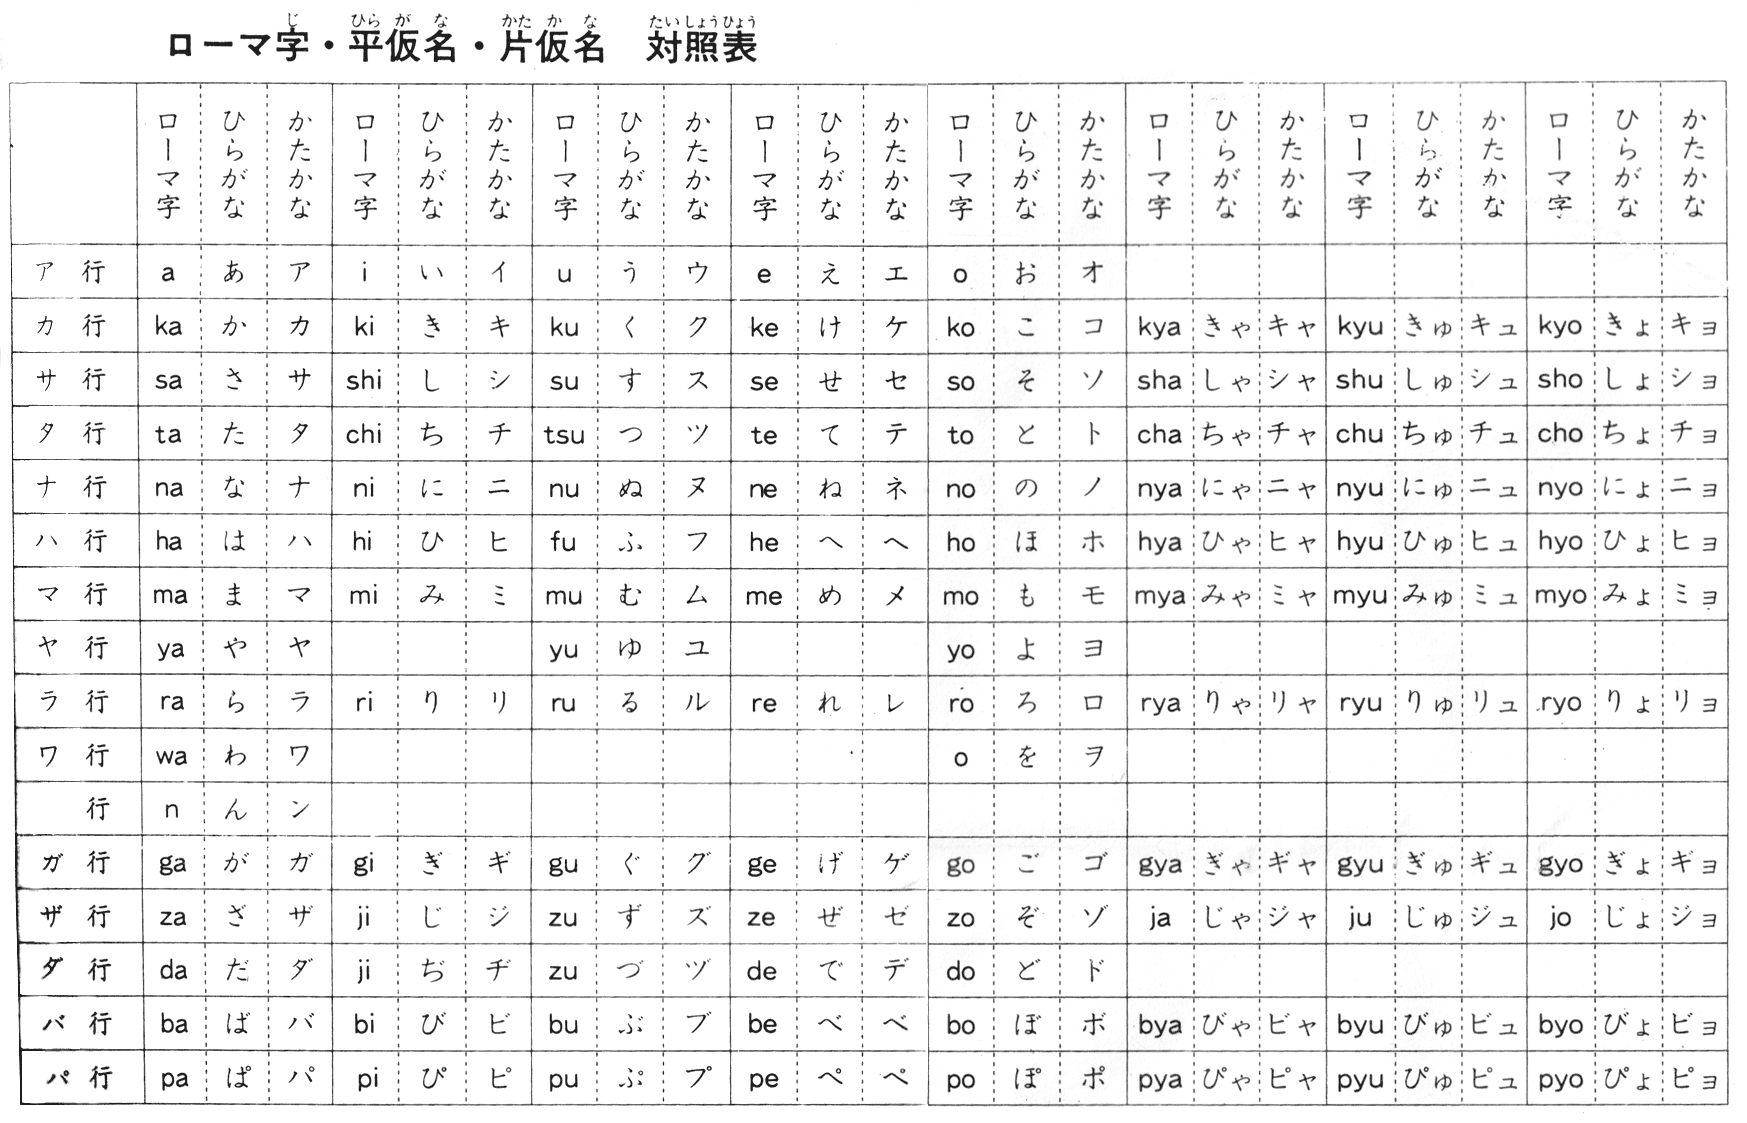 Alfabeto japonés Hiragana Katakana por semejanza en la escritura